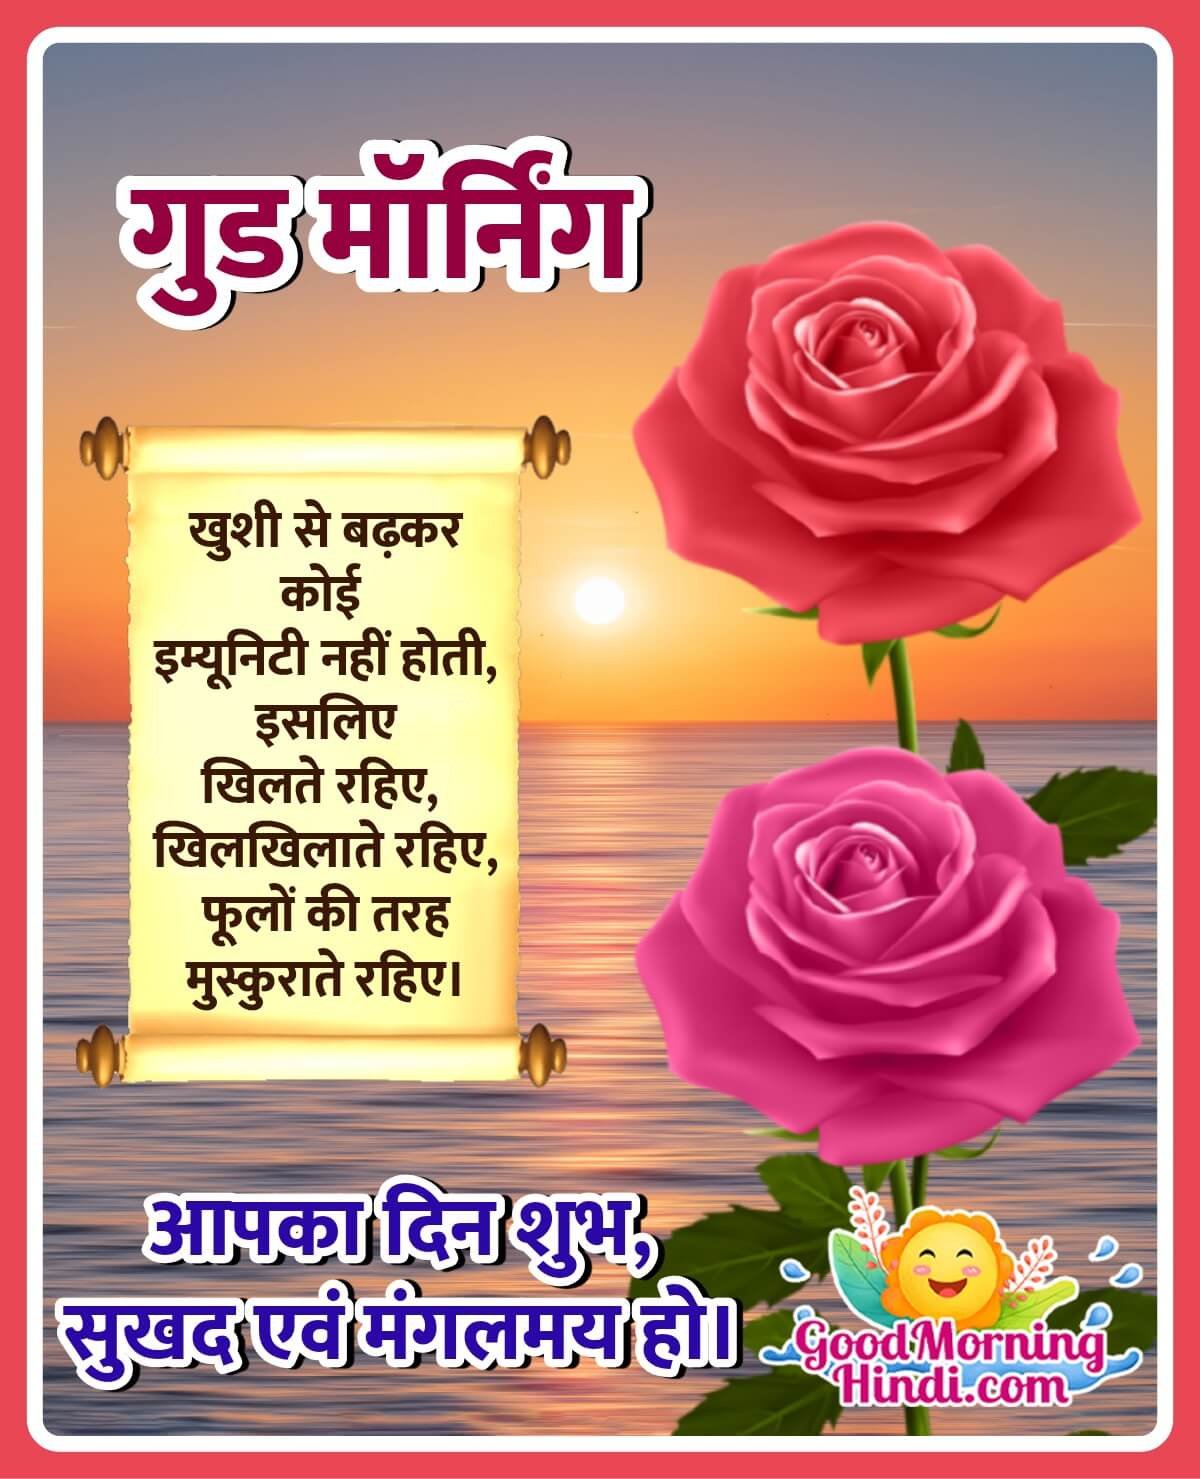 Good Morning Wish Image In Hindi